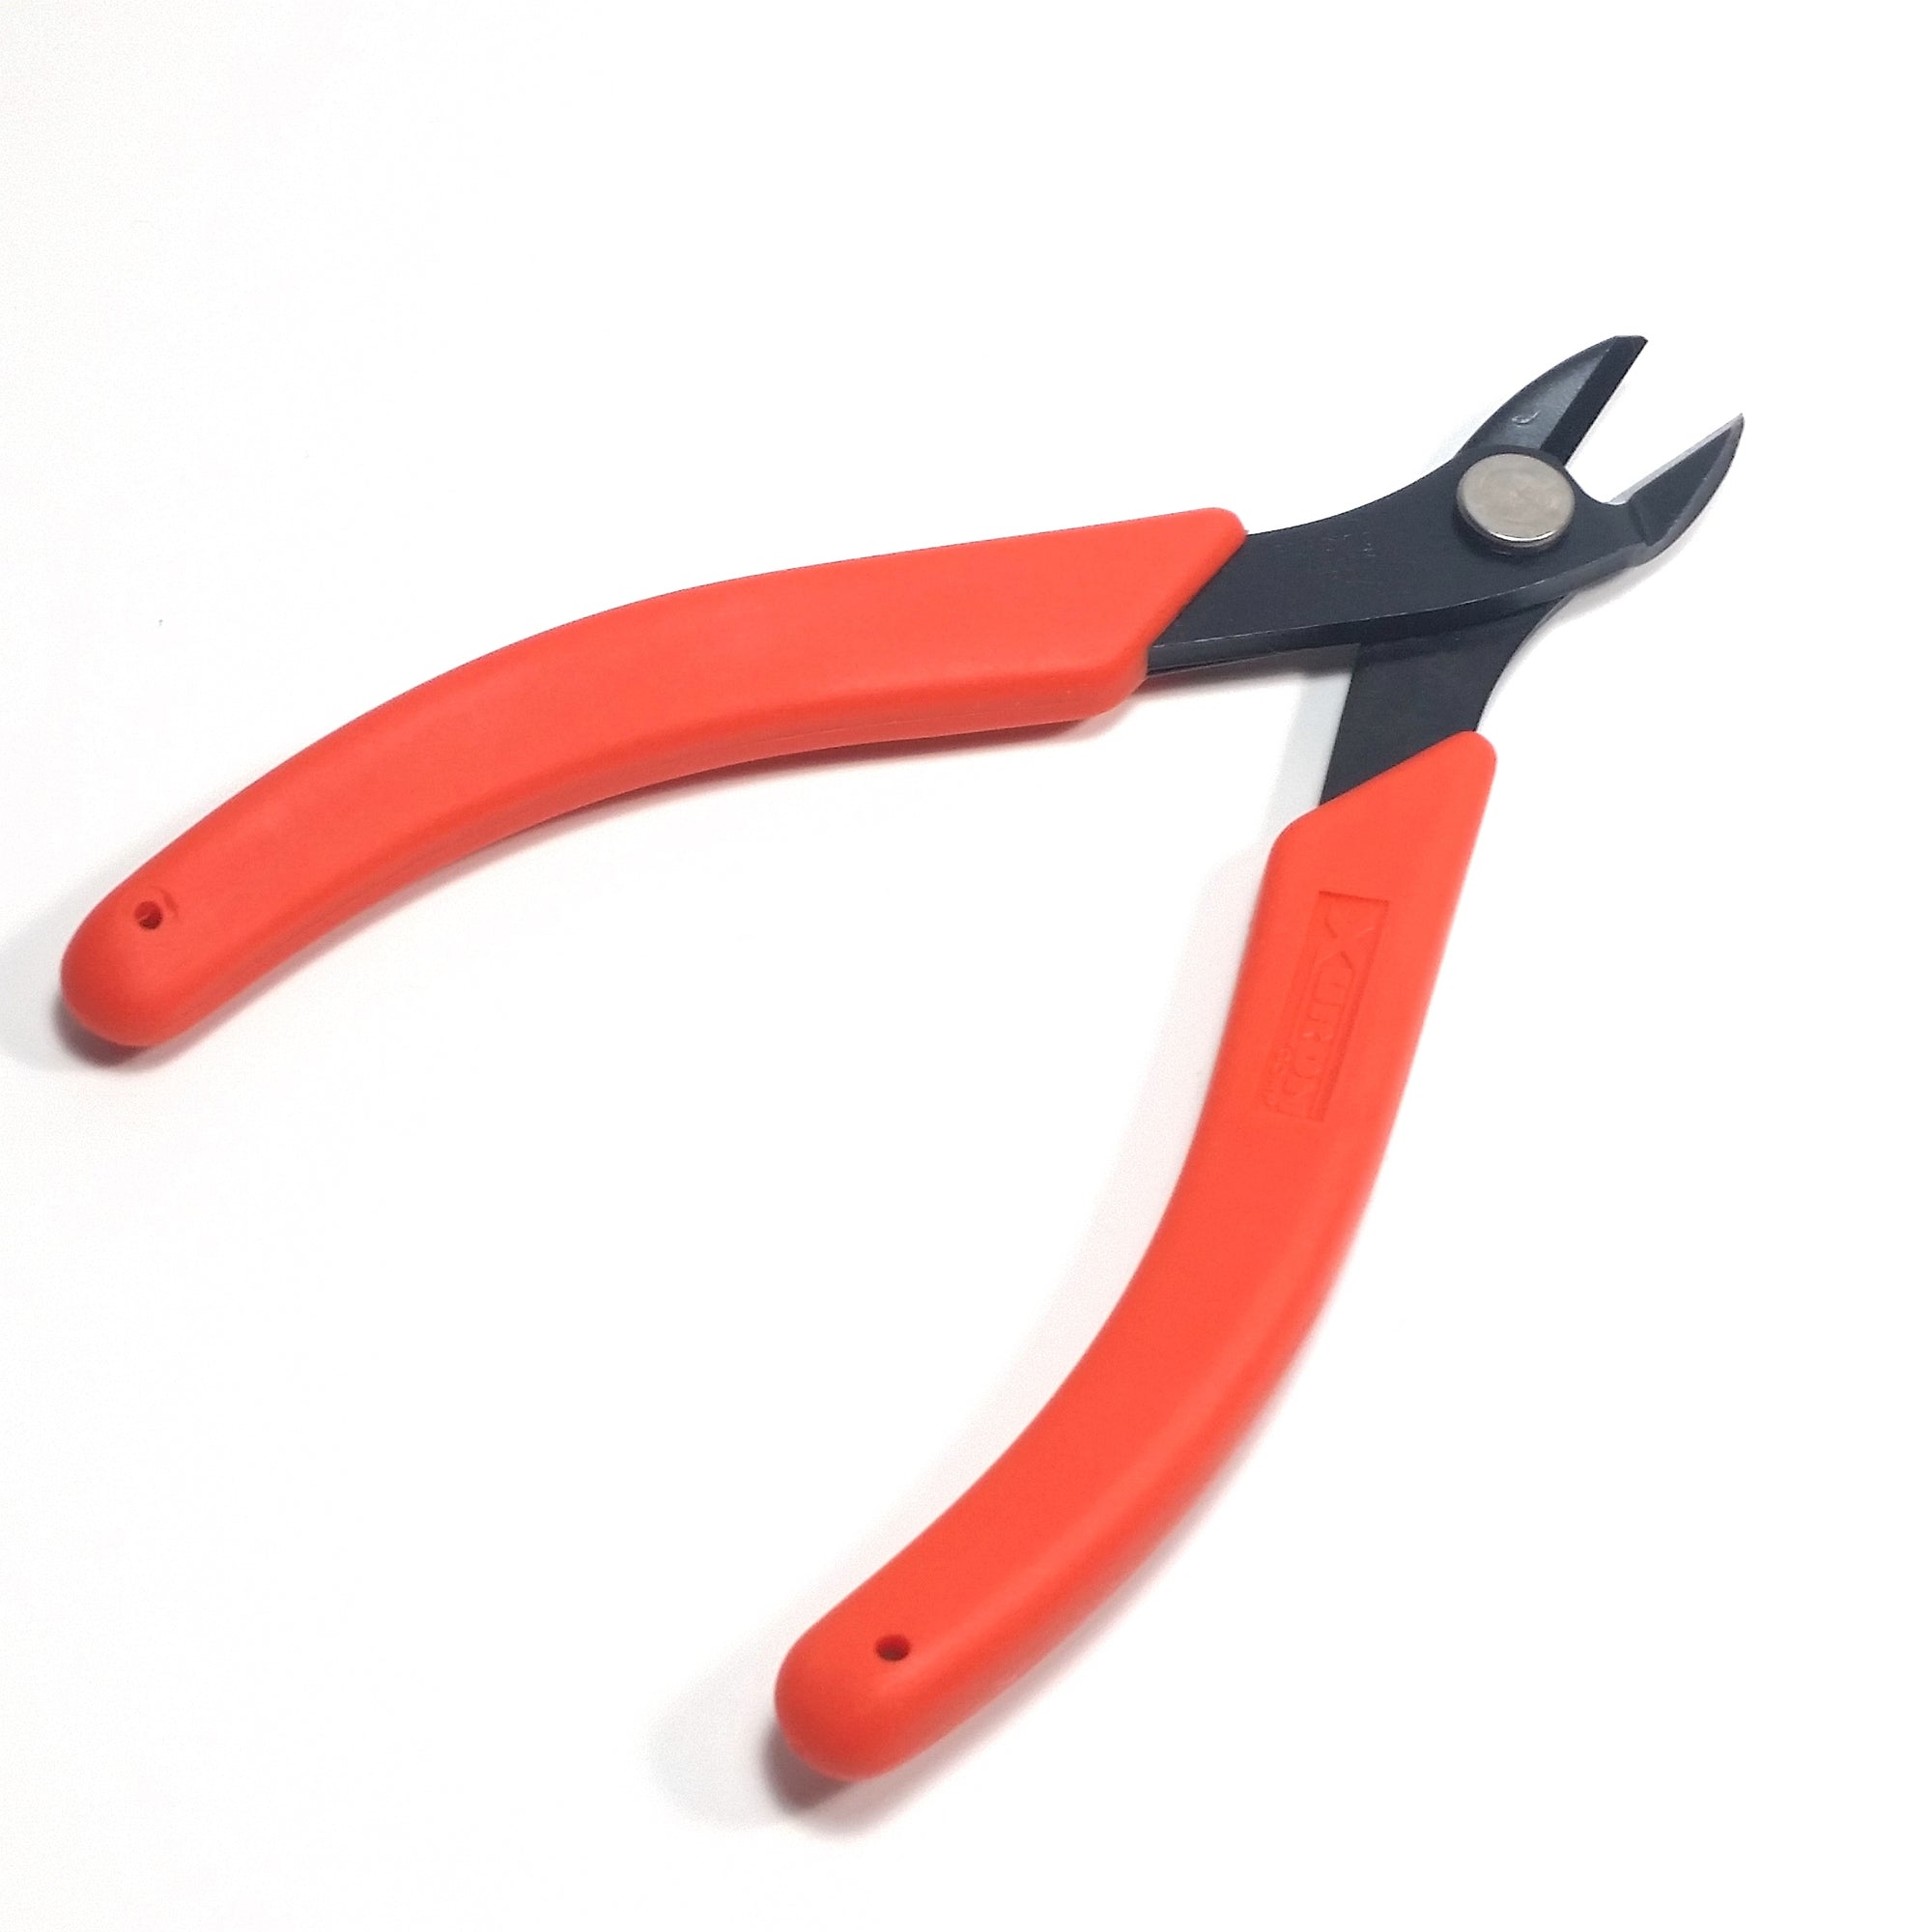 Xuron Maxi Shear Flush Cutter, Cuts up to 12 Gauge (2mm) Wire Made